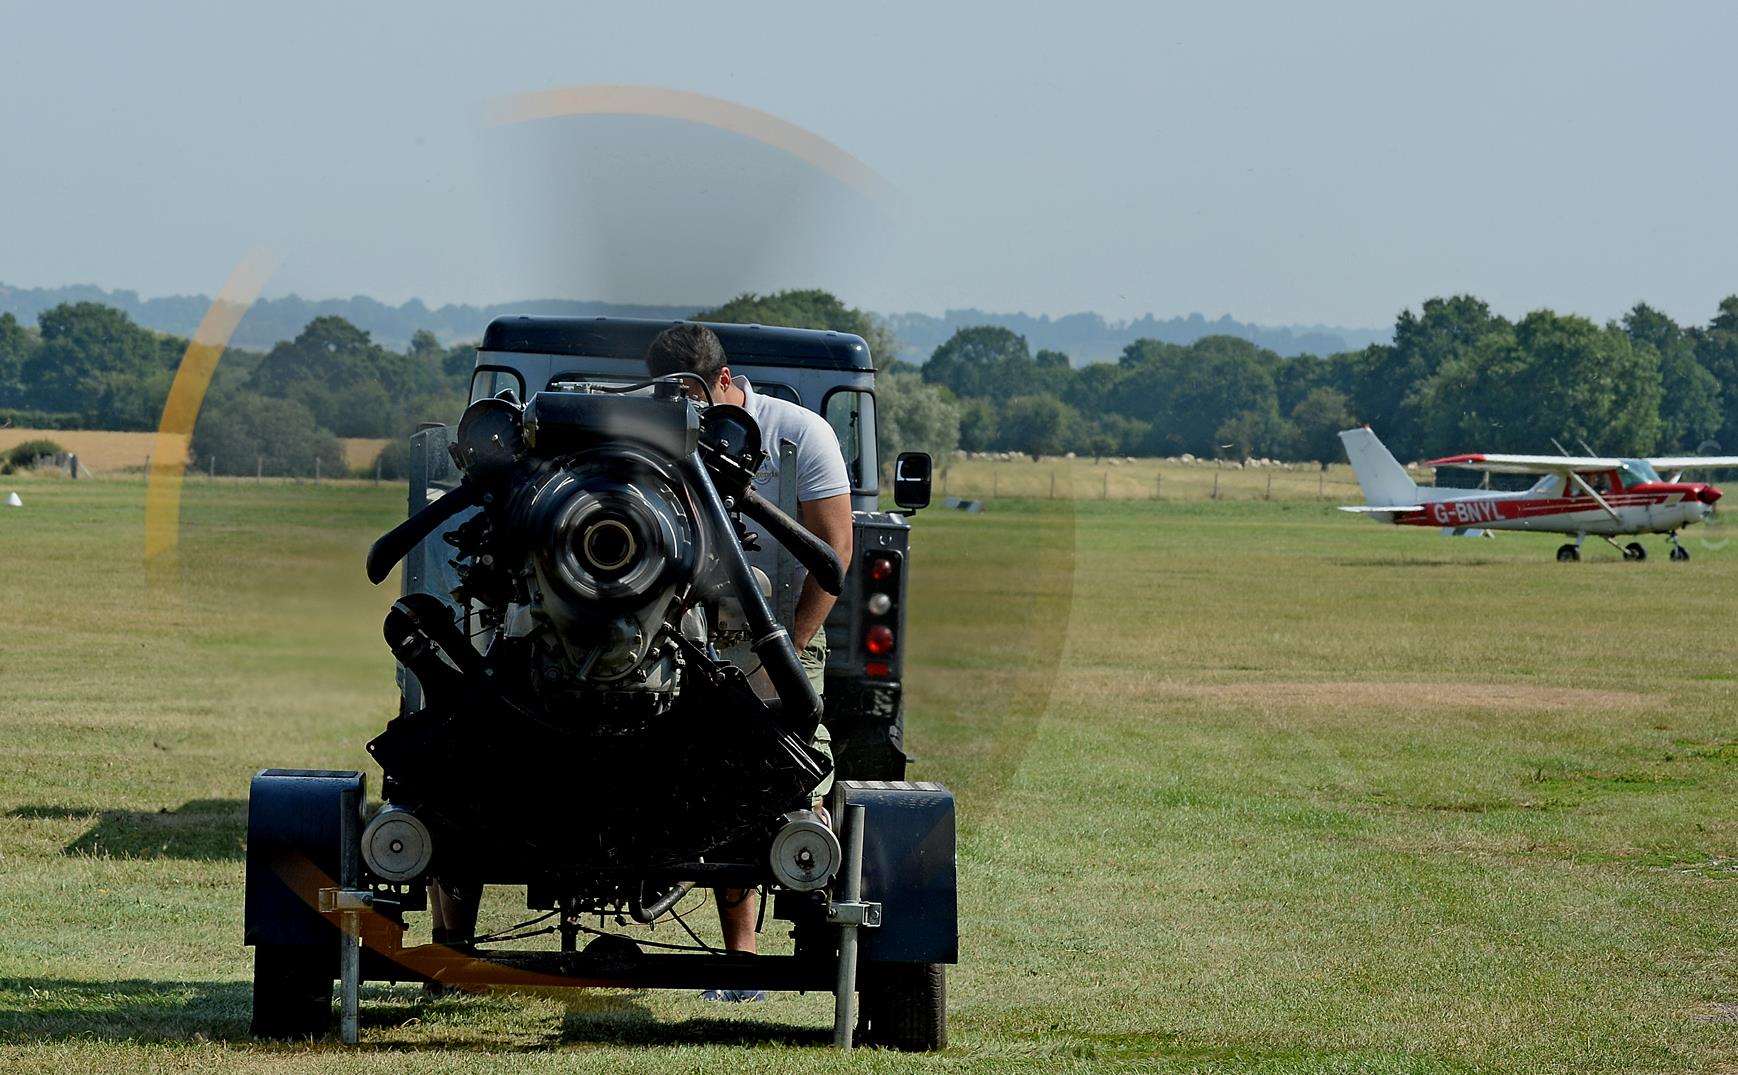 The Battle of Britain Air Show will be at Headcorn Aerodrome